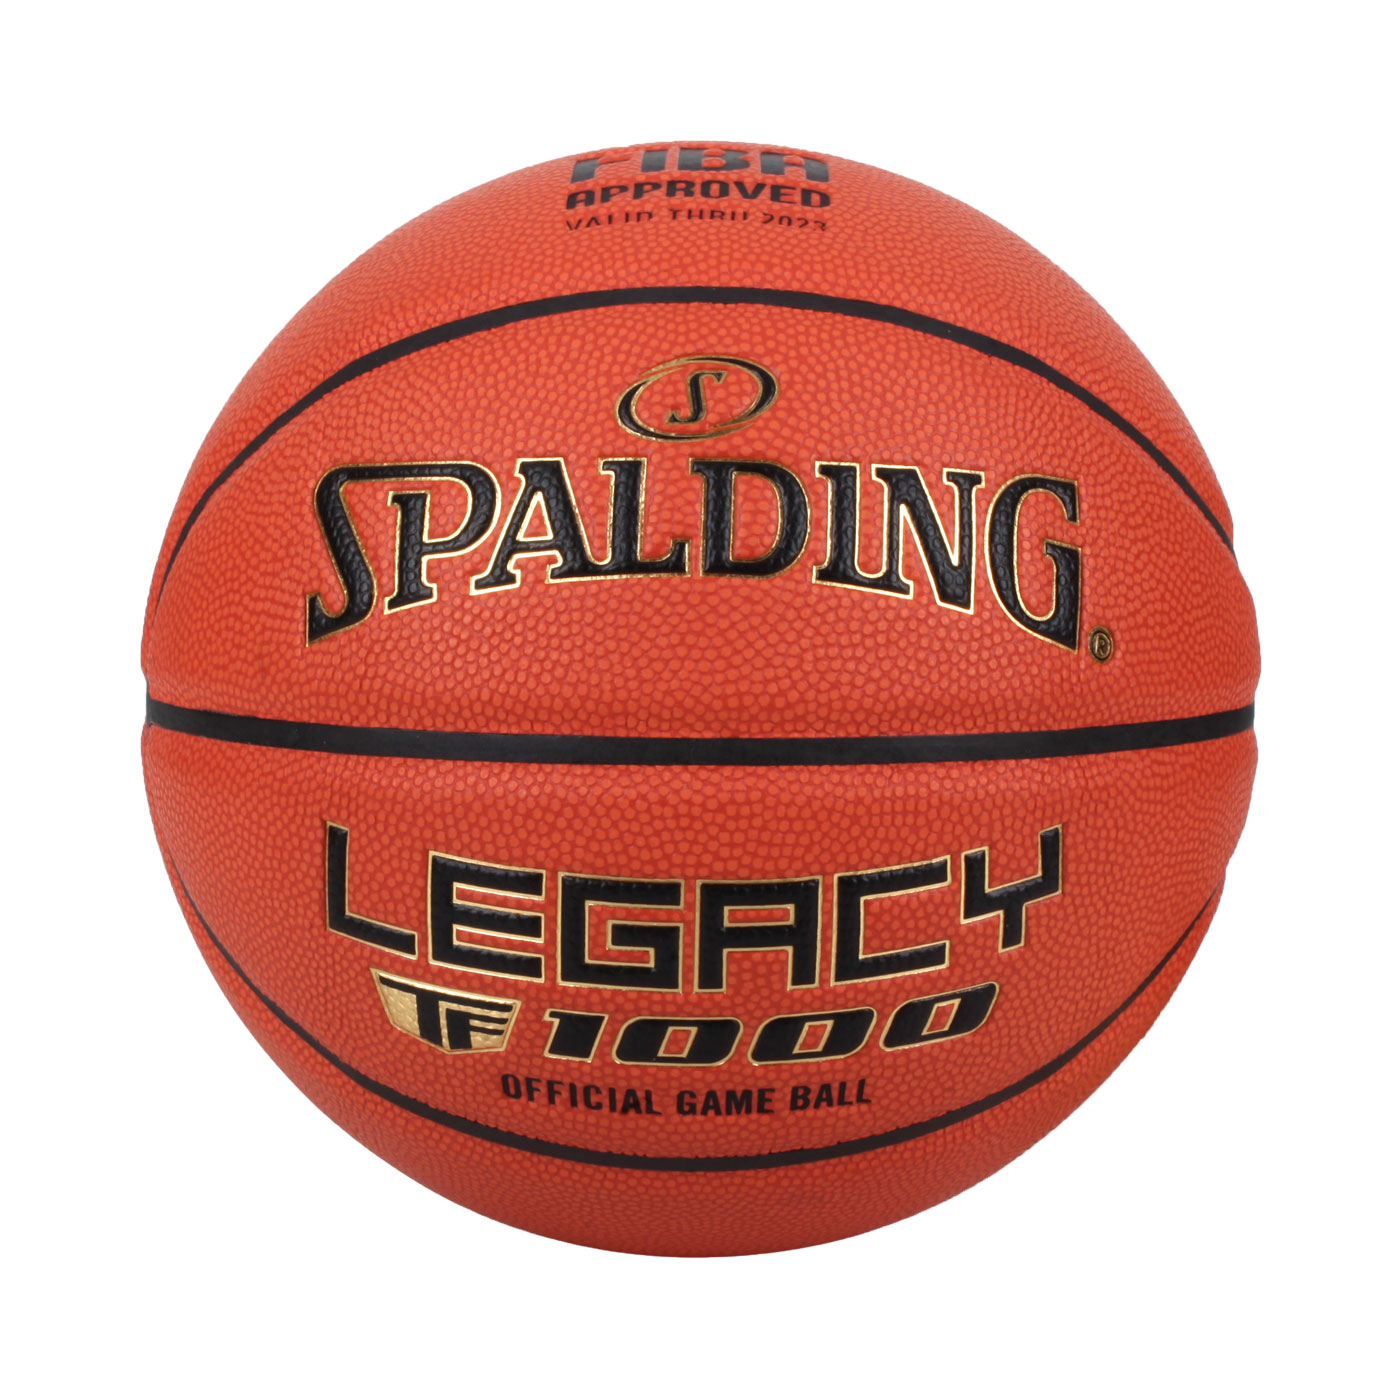 SPALDING TF-1000 Legacy #6合成皮籃球#40691 SPA76964